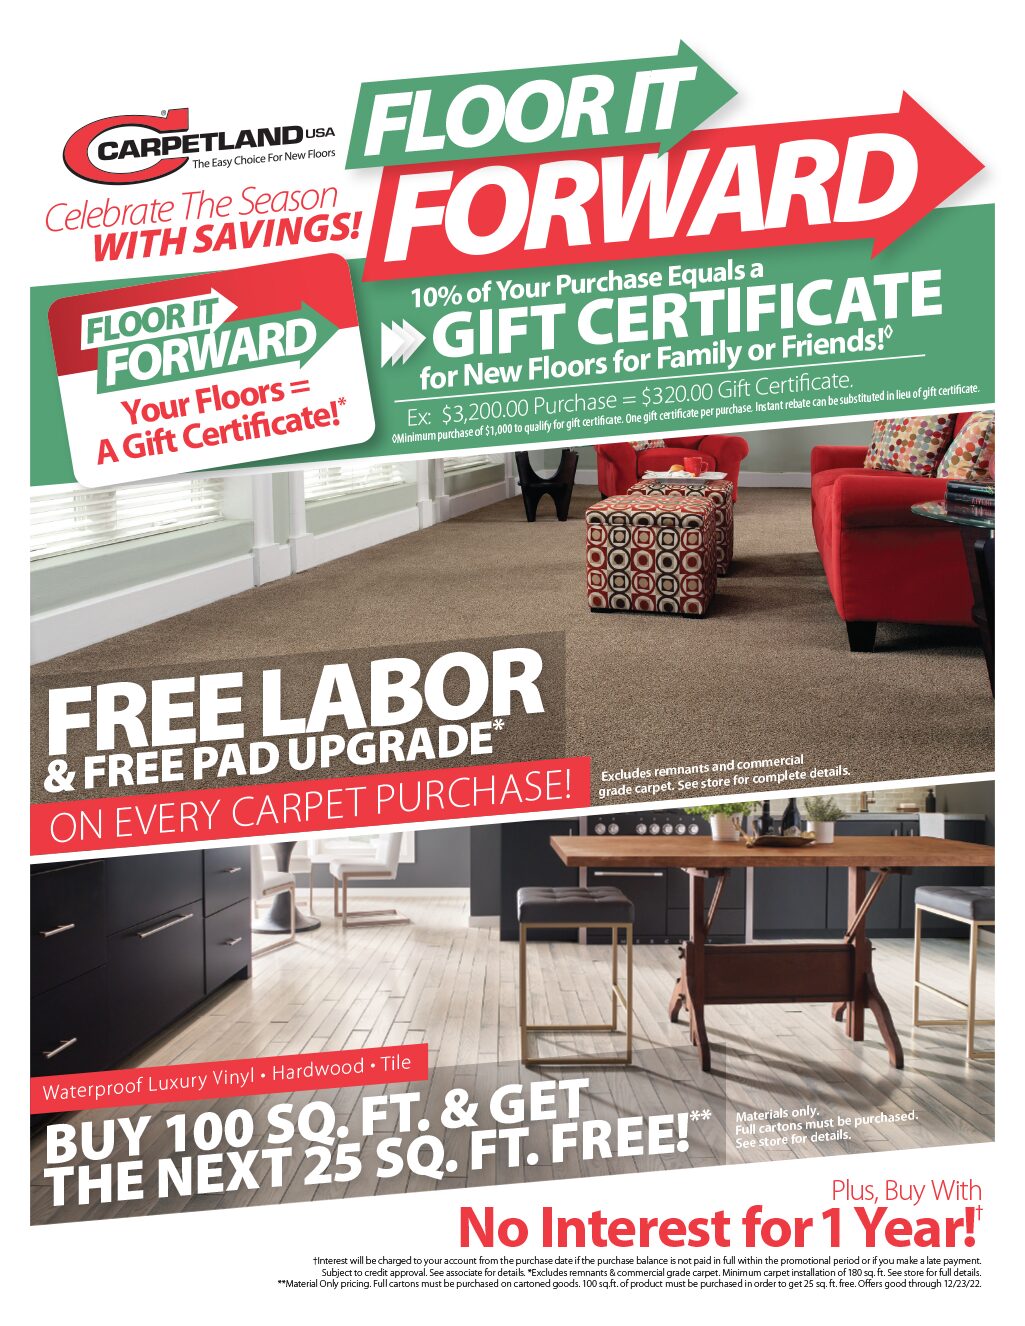 Carpetland USA Floor-It-Forward Savings Event